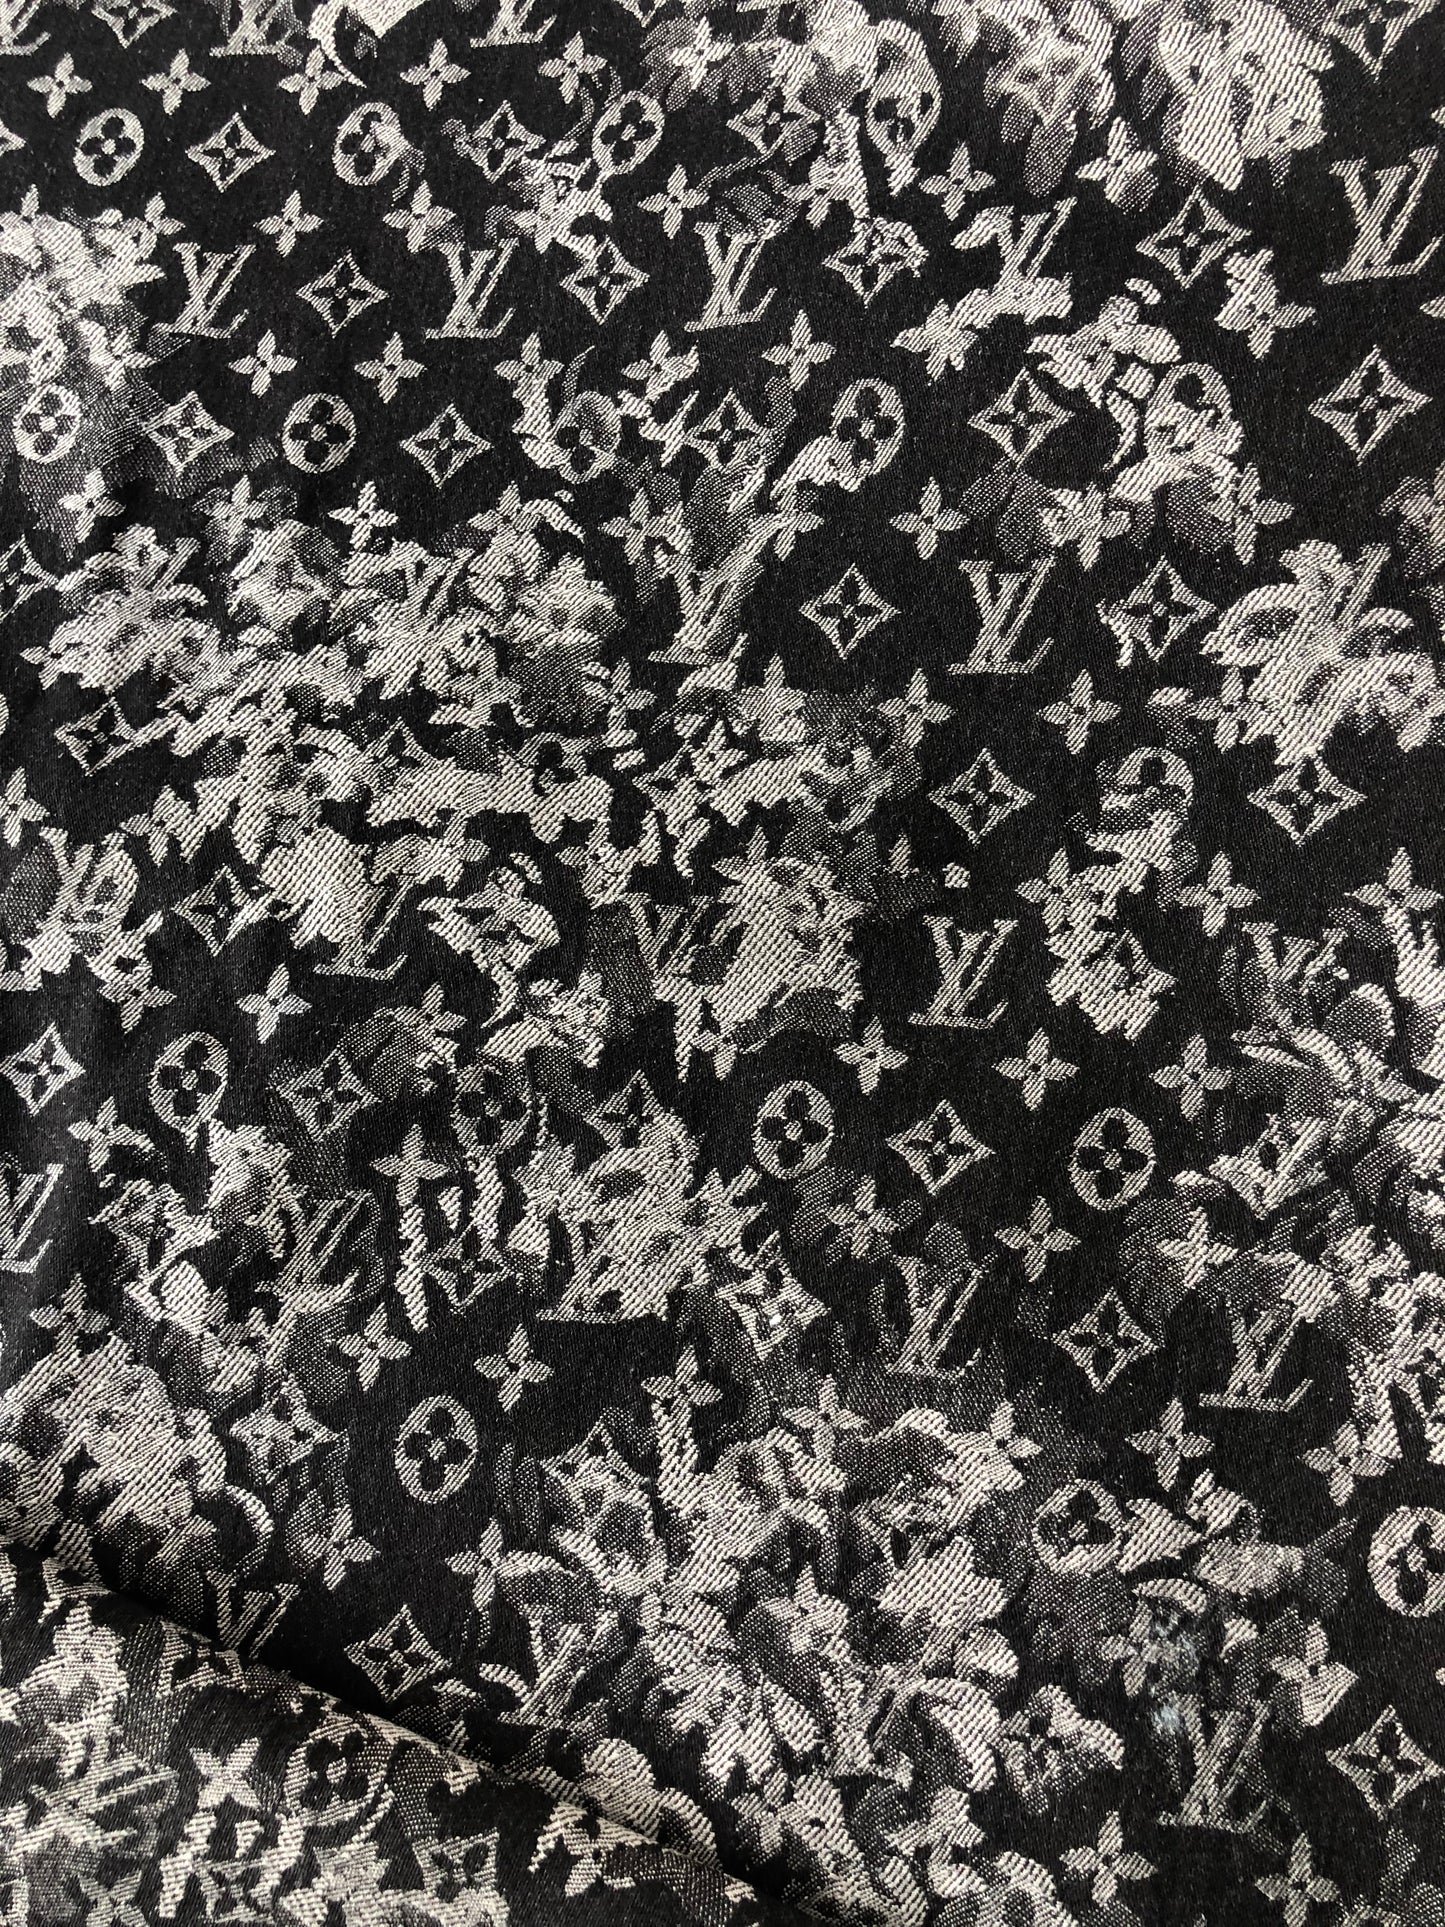 LV Denim Camouflage Cotton Fabric for Custom Jacket